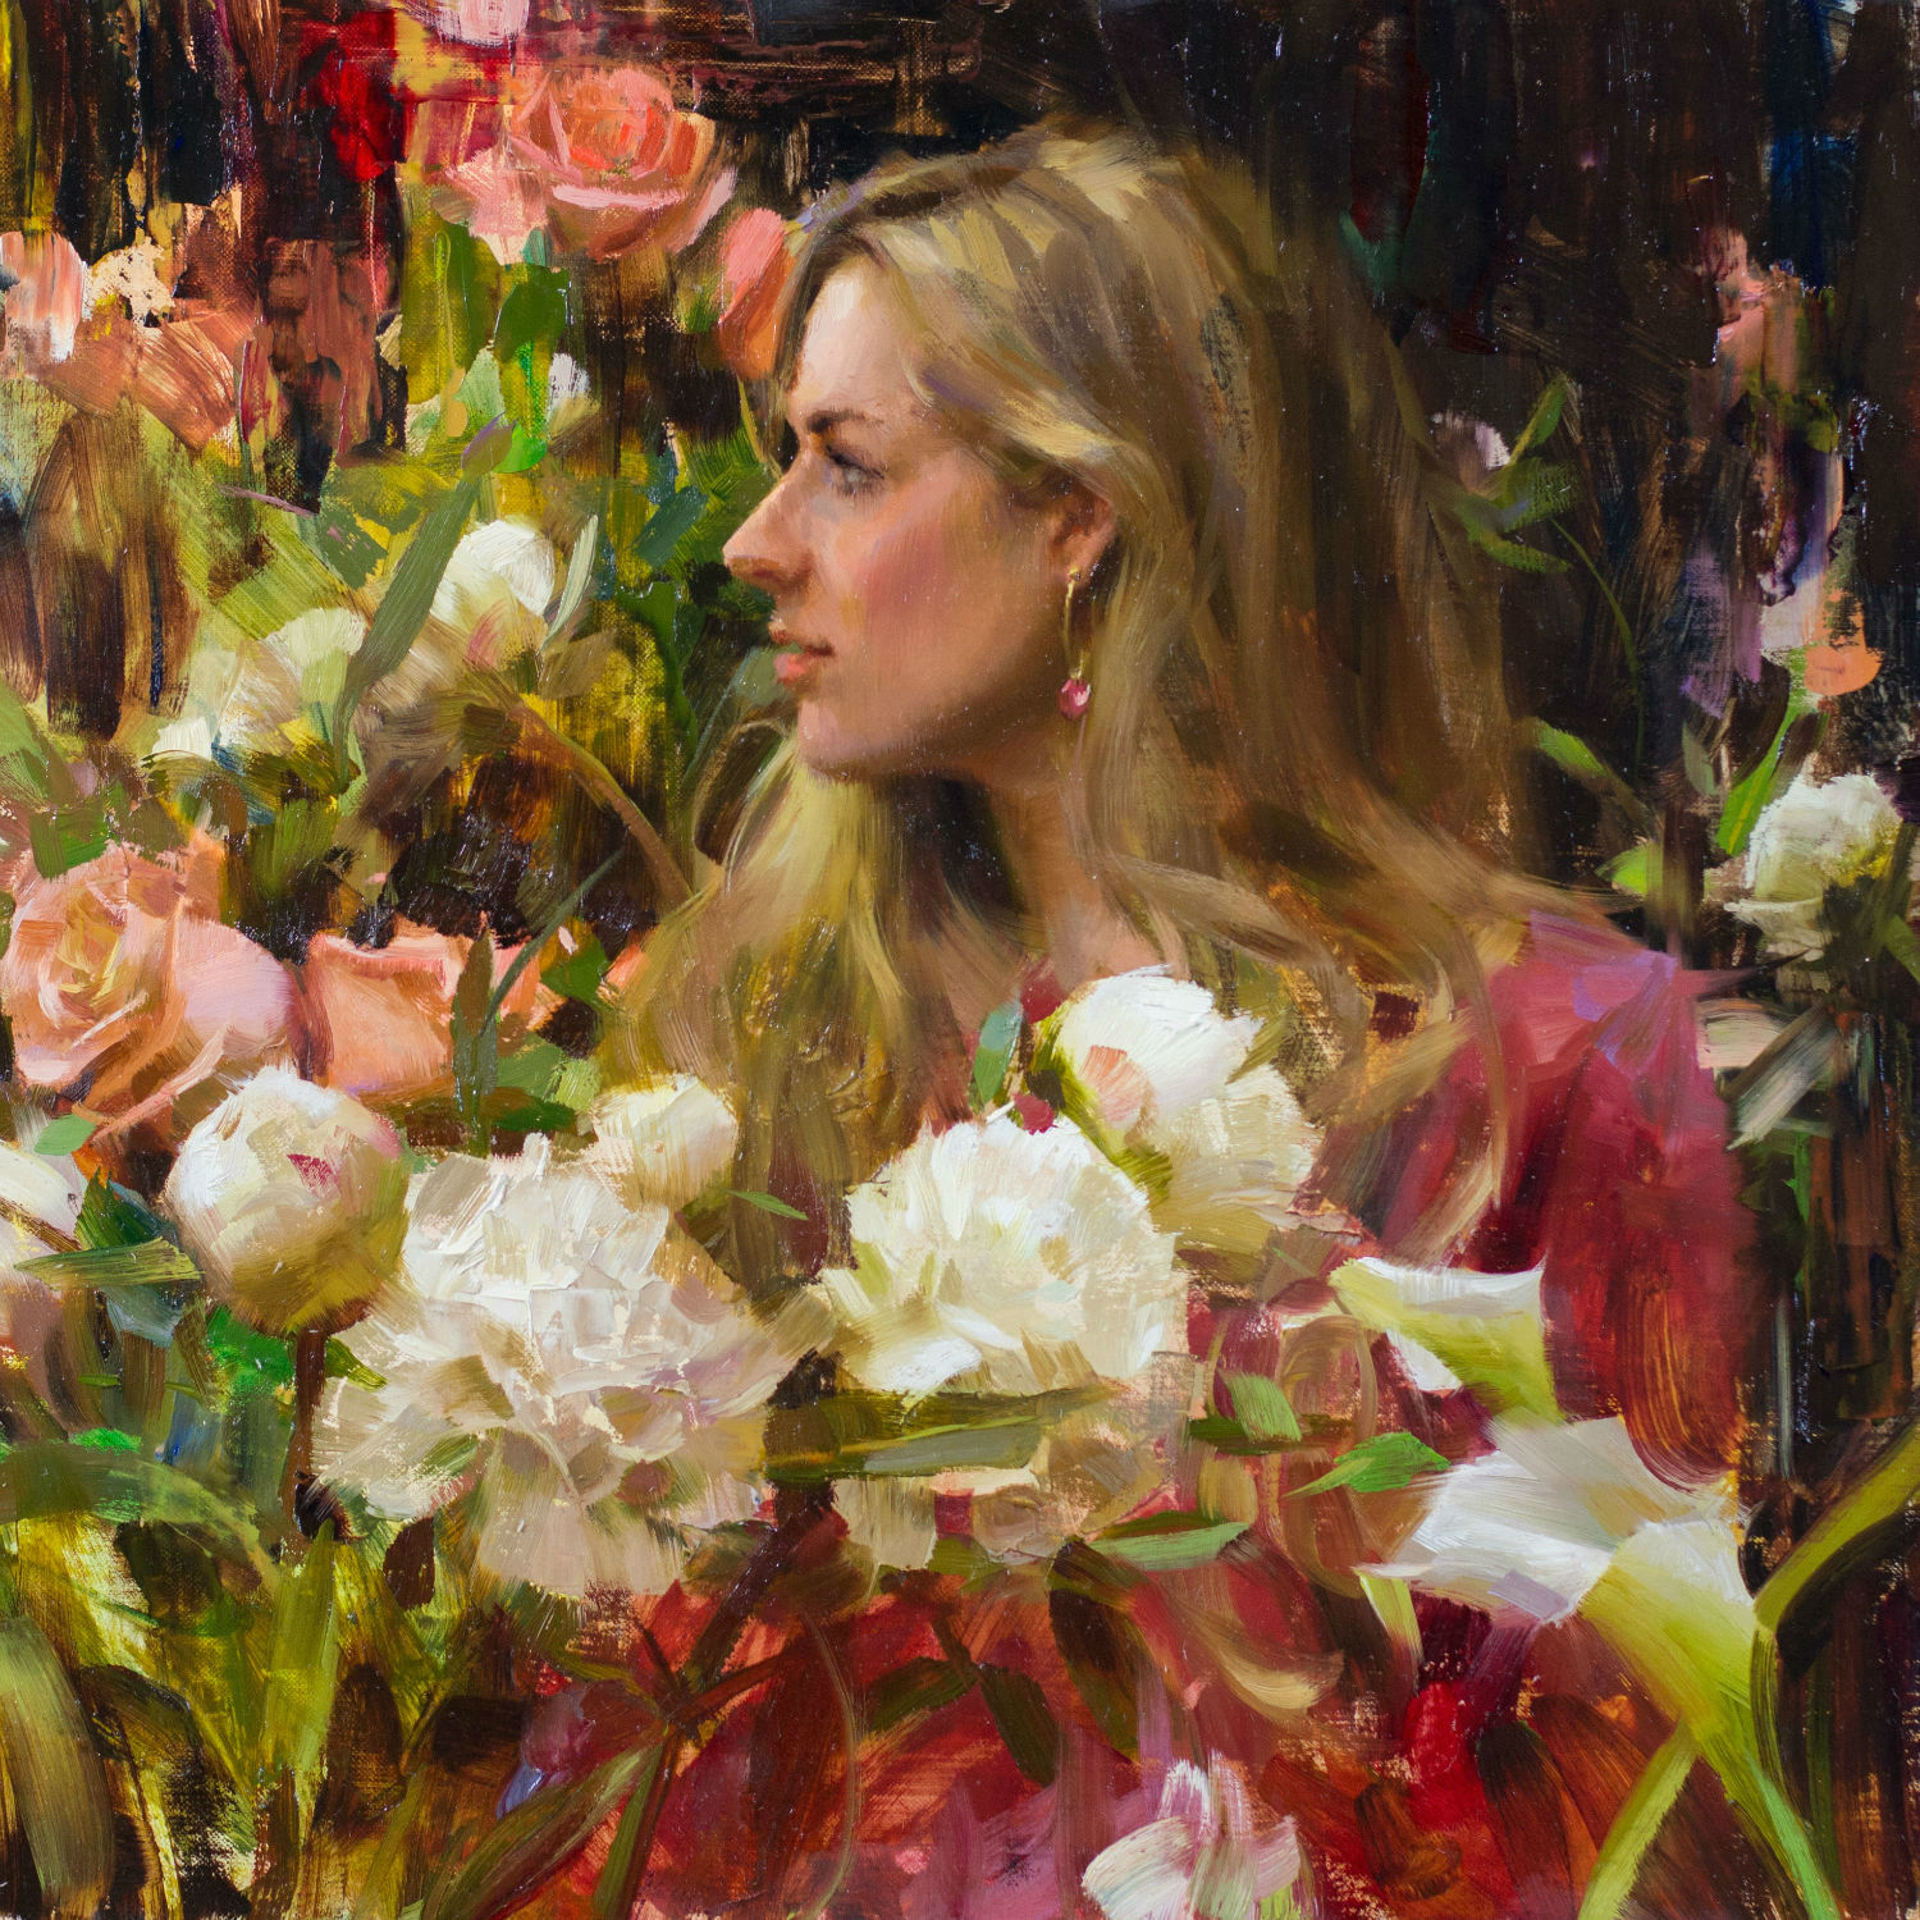 Jaime with Flowers by Daniel Keys